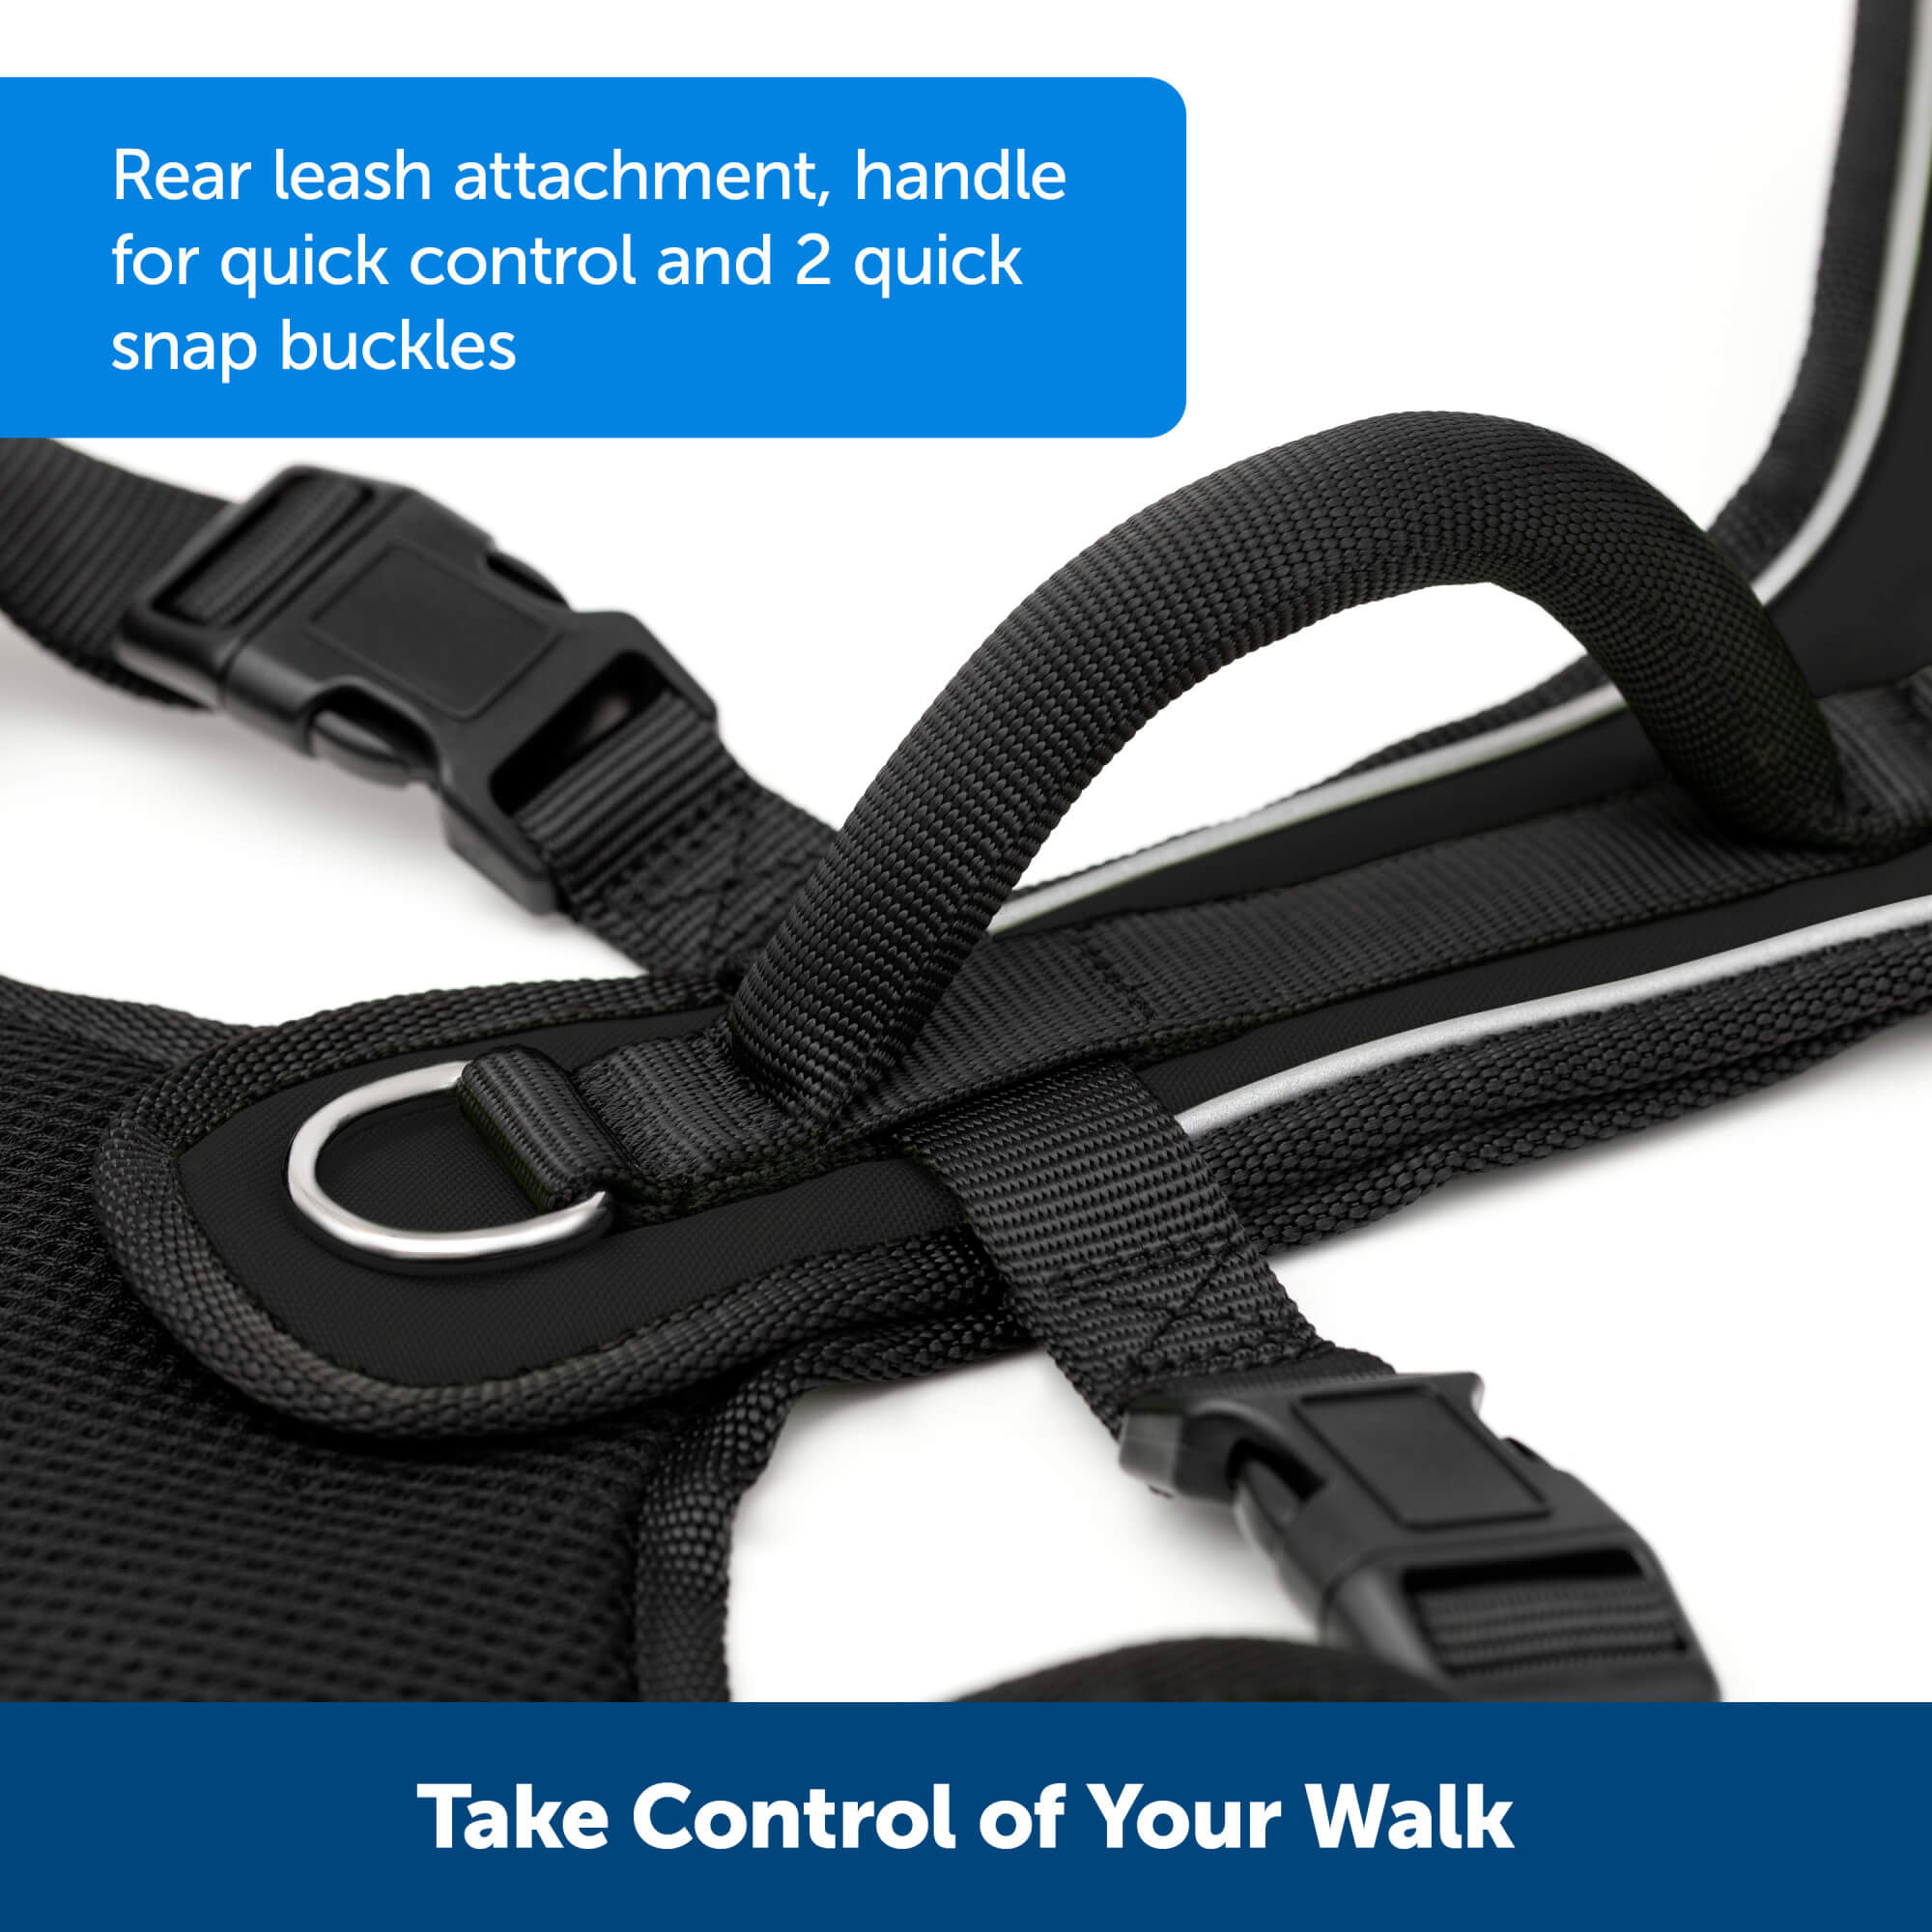 Take control of your walk